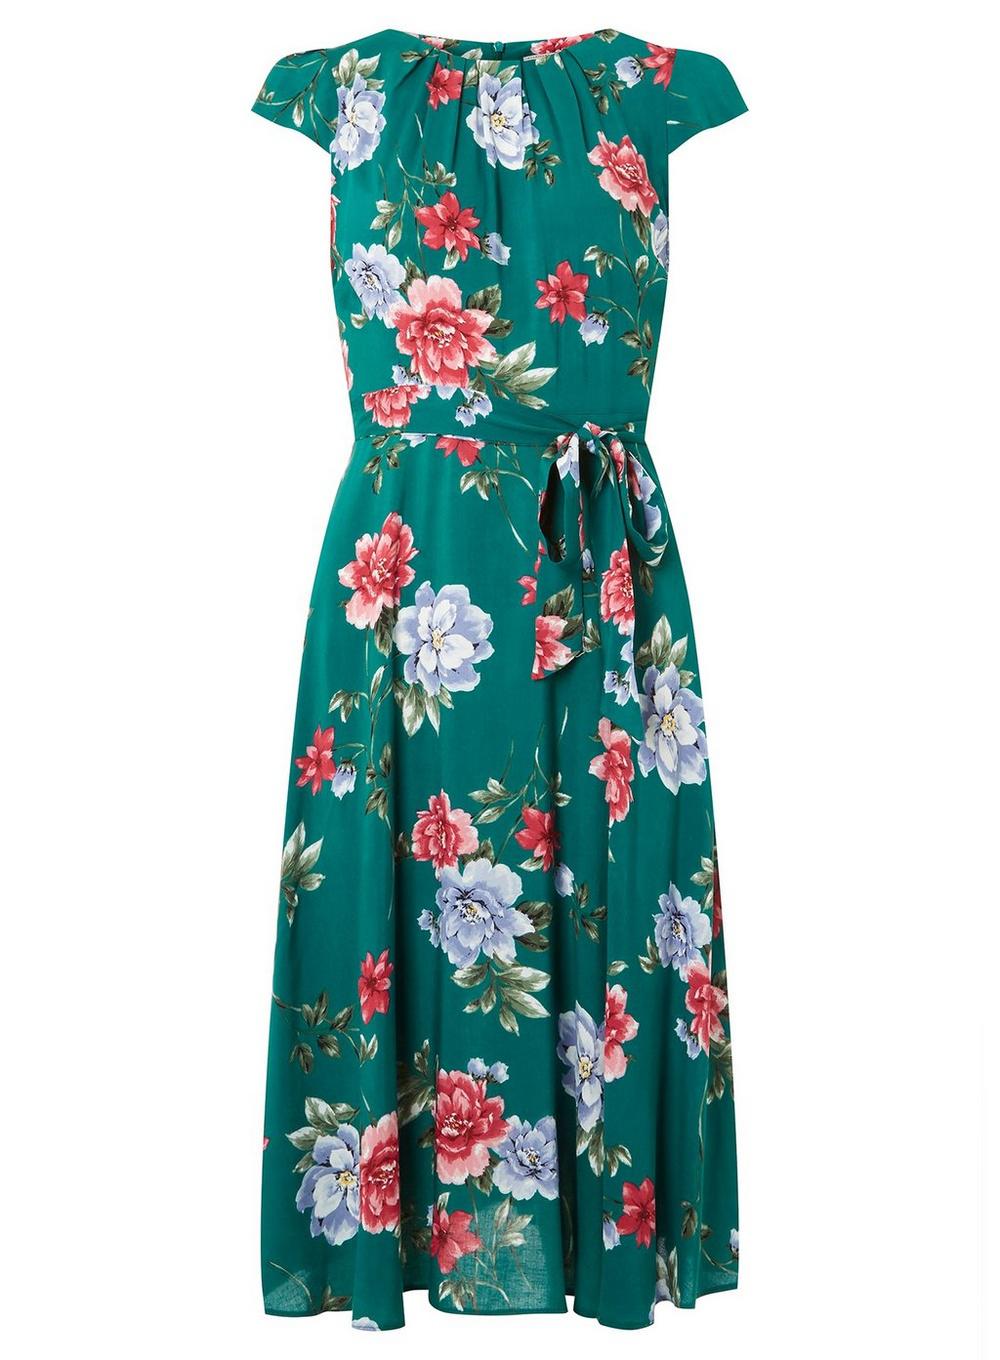 Lyst - Dorothy Perkins Billie & Blossom Petite Green Floral Print Dress ...